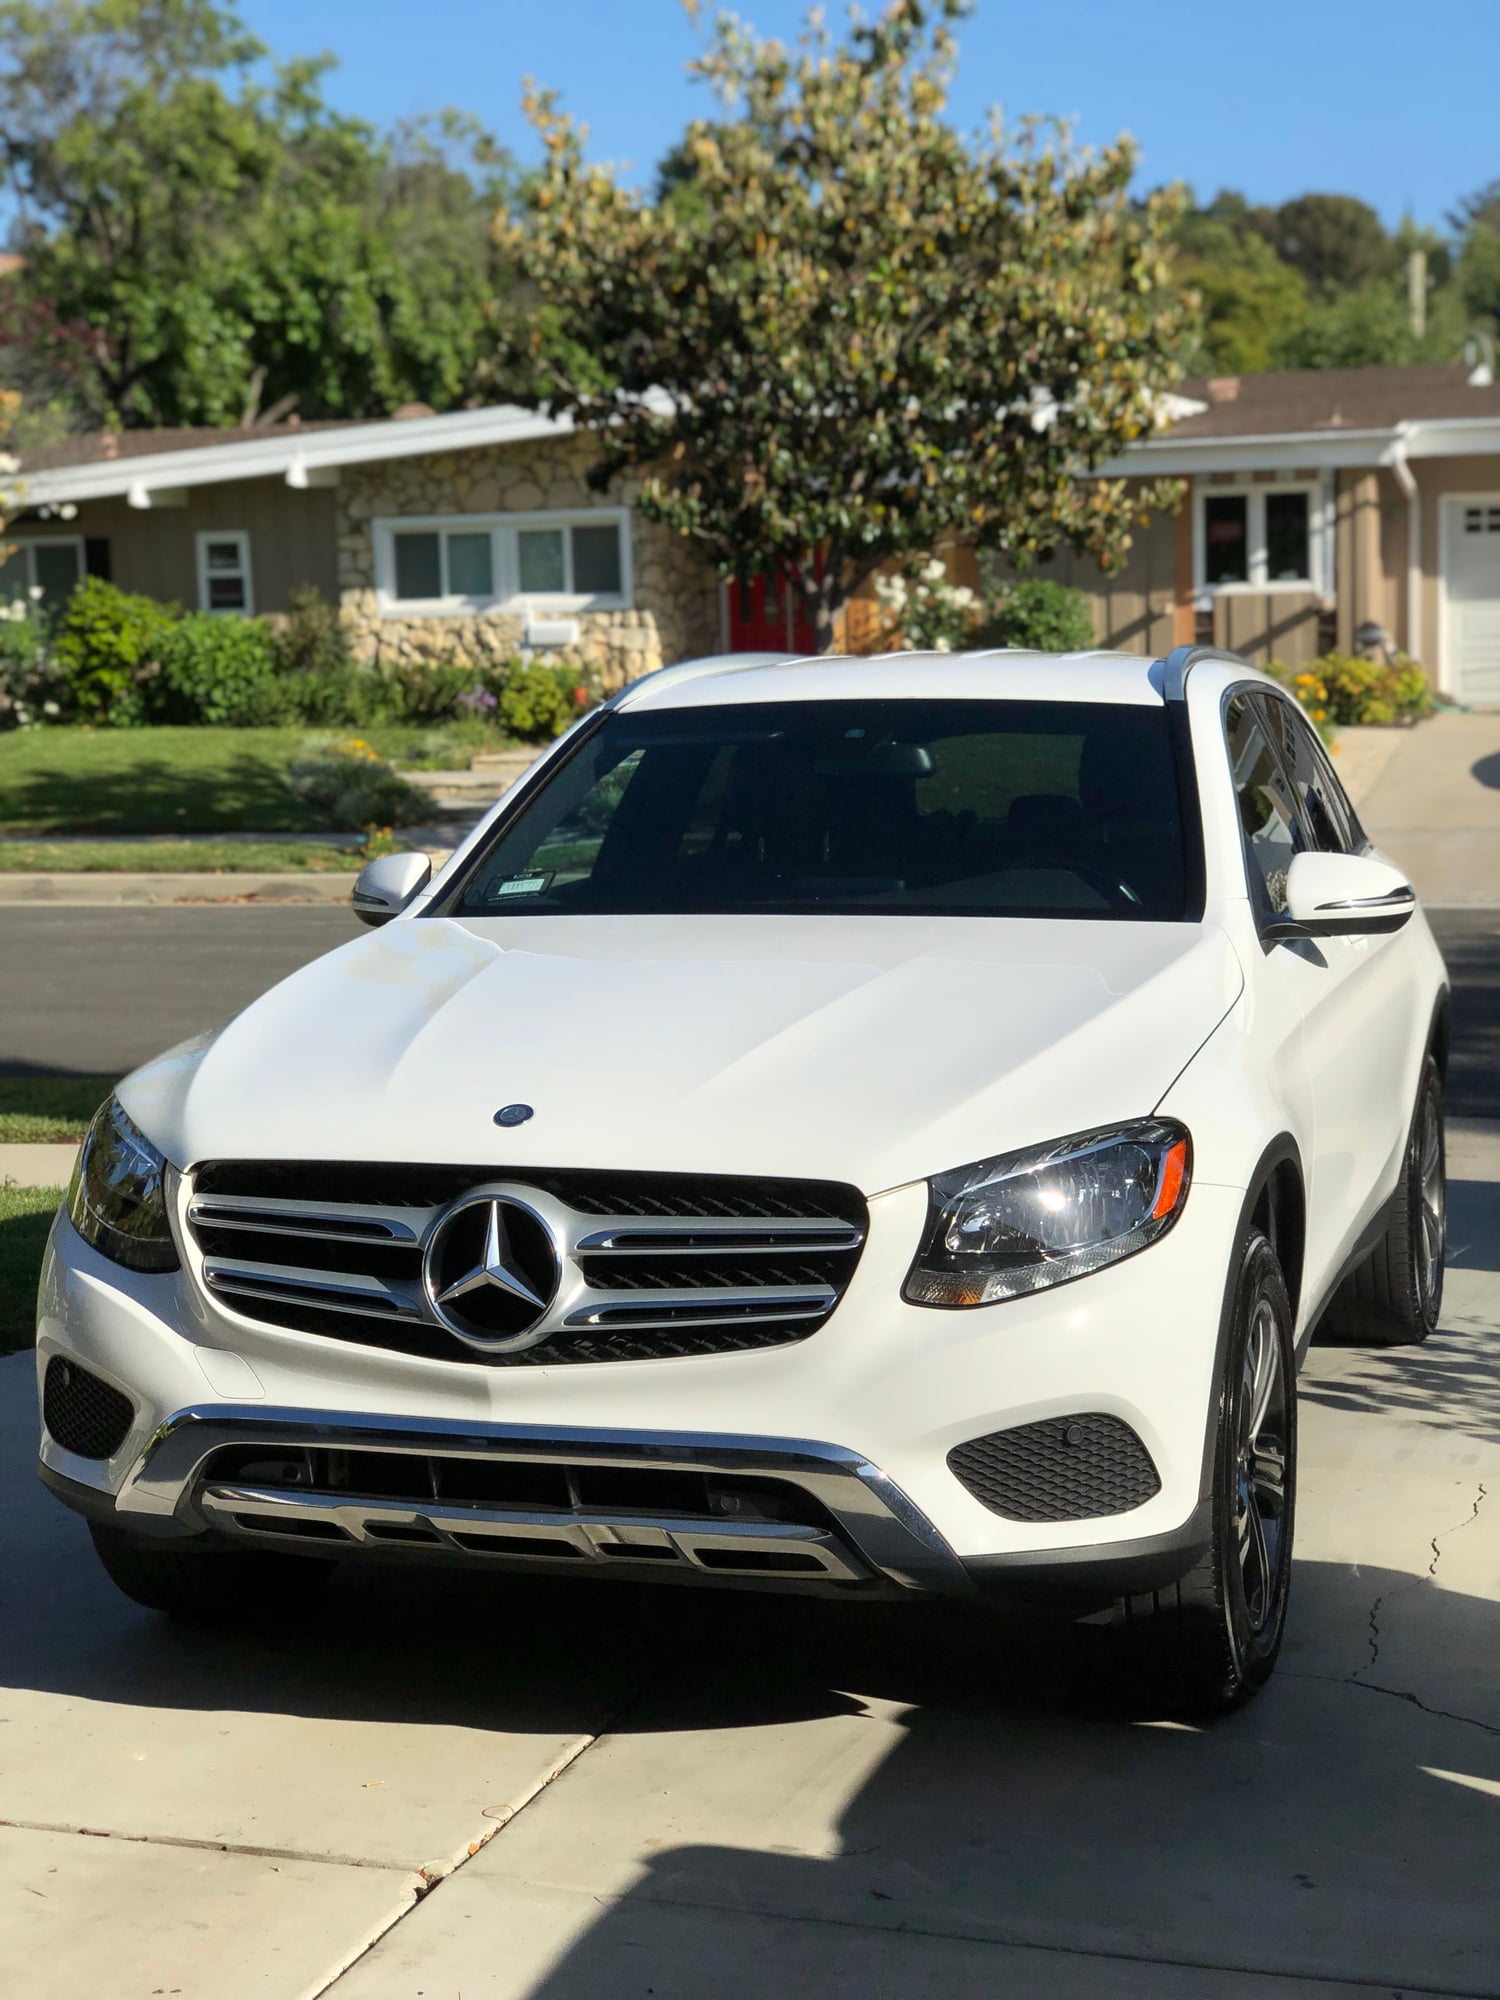 2017 Mercedes-Benz GLC300 - 2017 glc300 $26k - Used - VIN Wdc0g4jb1he137700 - 54,037 Miles - 4 cyl - 2WD - Automatic - SUV - White - Woodland Hills, CA 91364, United States